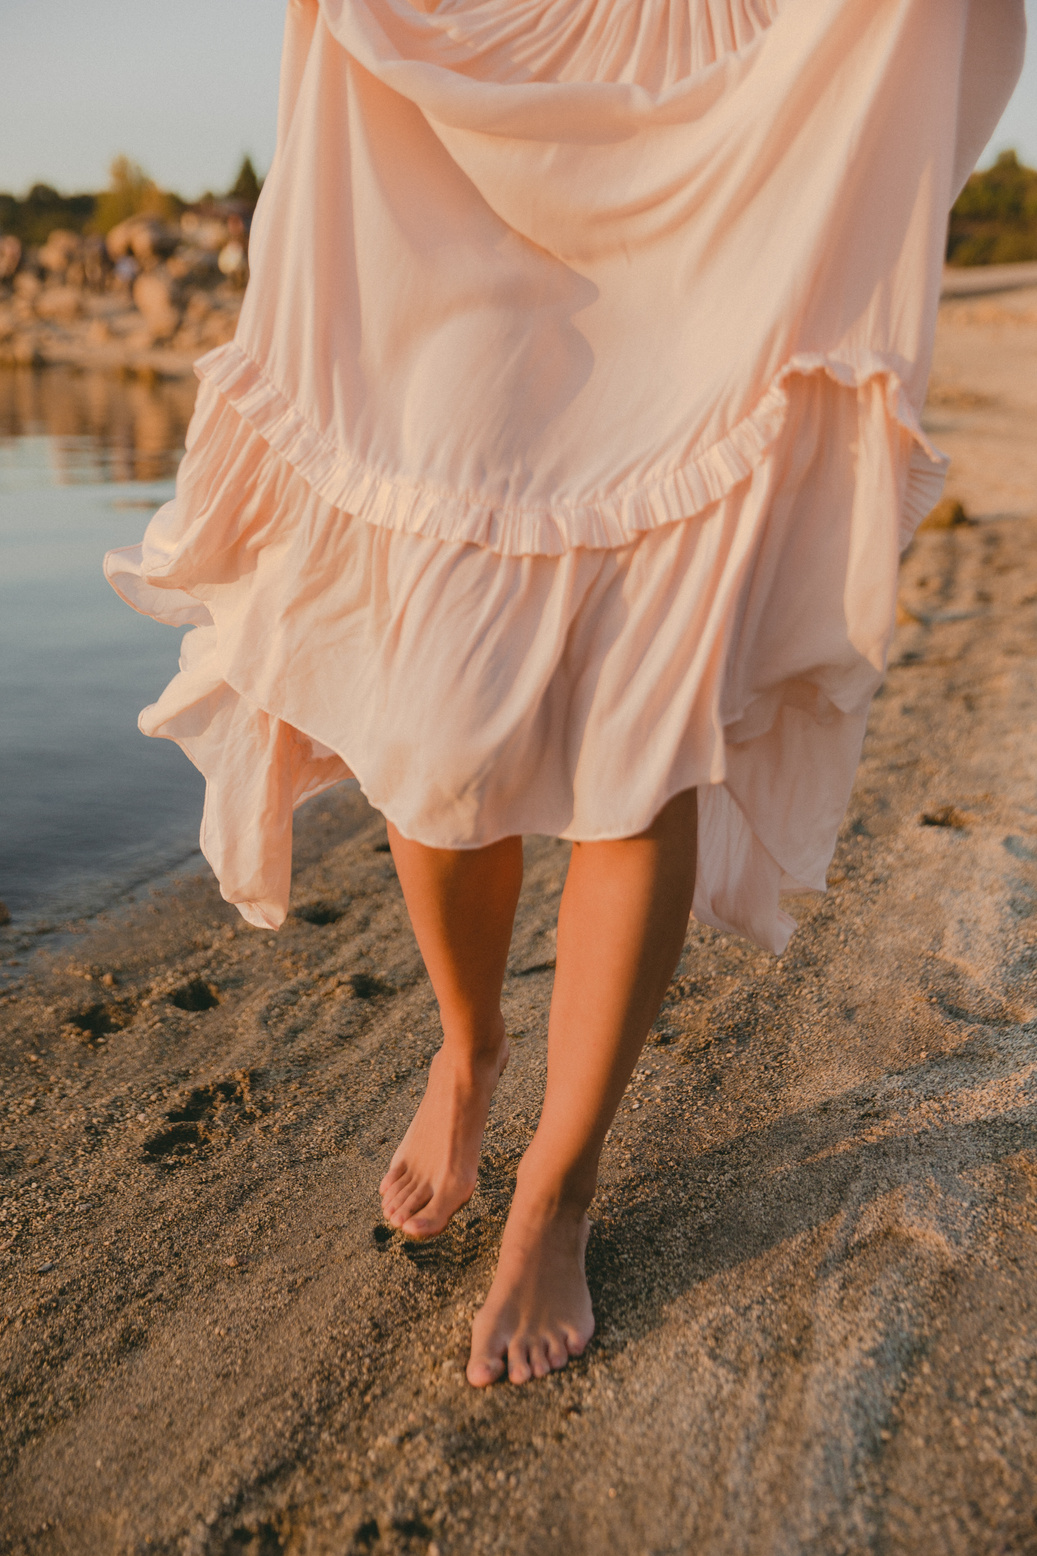 Woman in Sheer Dress Walking on the Shore